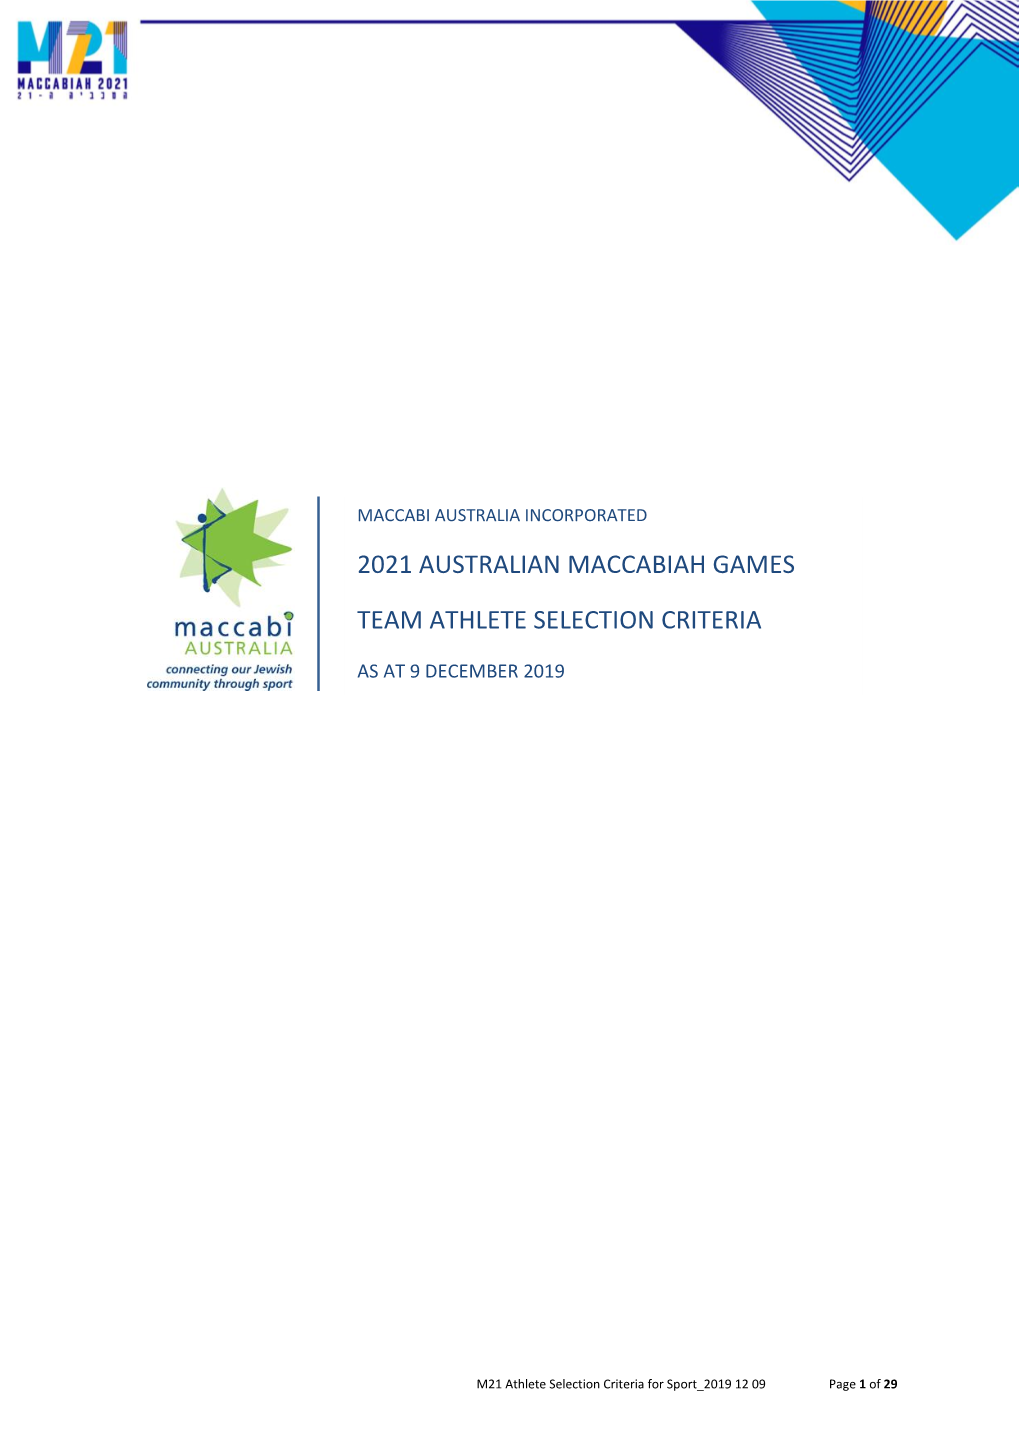 2021 Australian Maccabiah Games Team Athlete